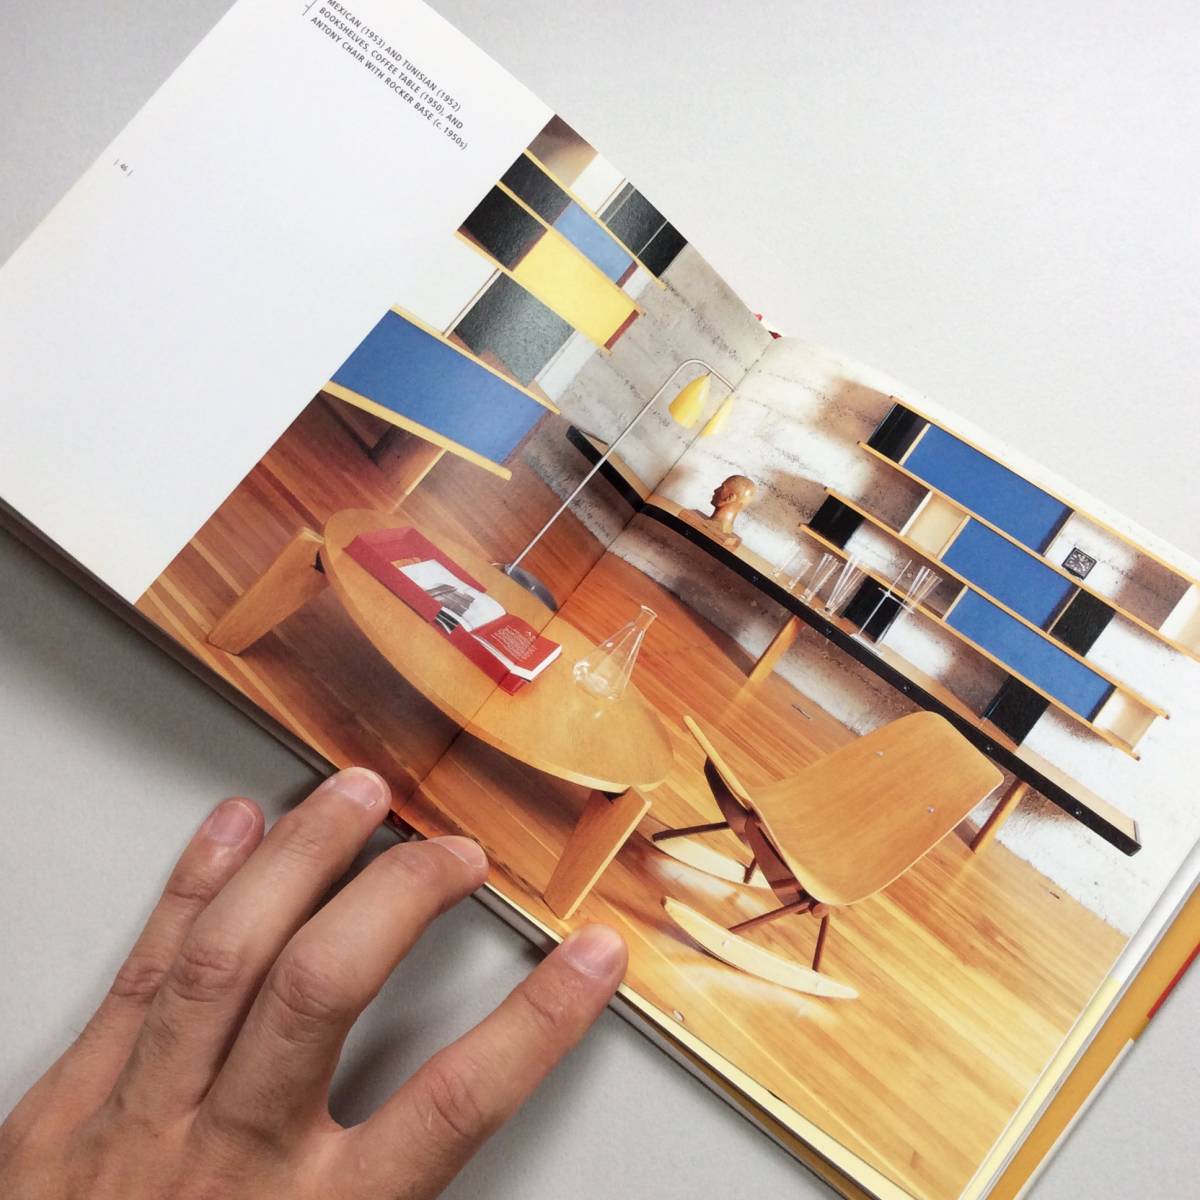 Jean Prouve: Compact Design Portfolio / ジャン・プルーヴェ ポートフォリオ集の画像6